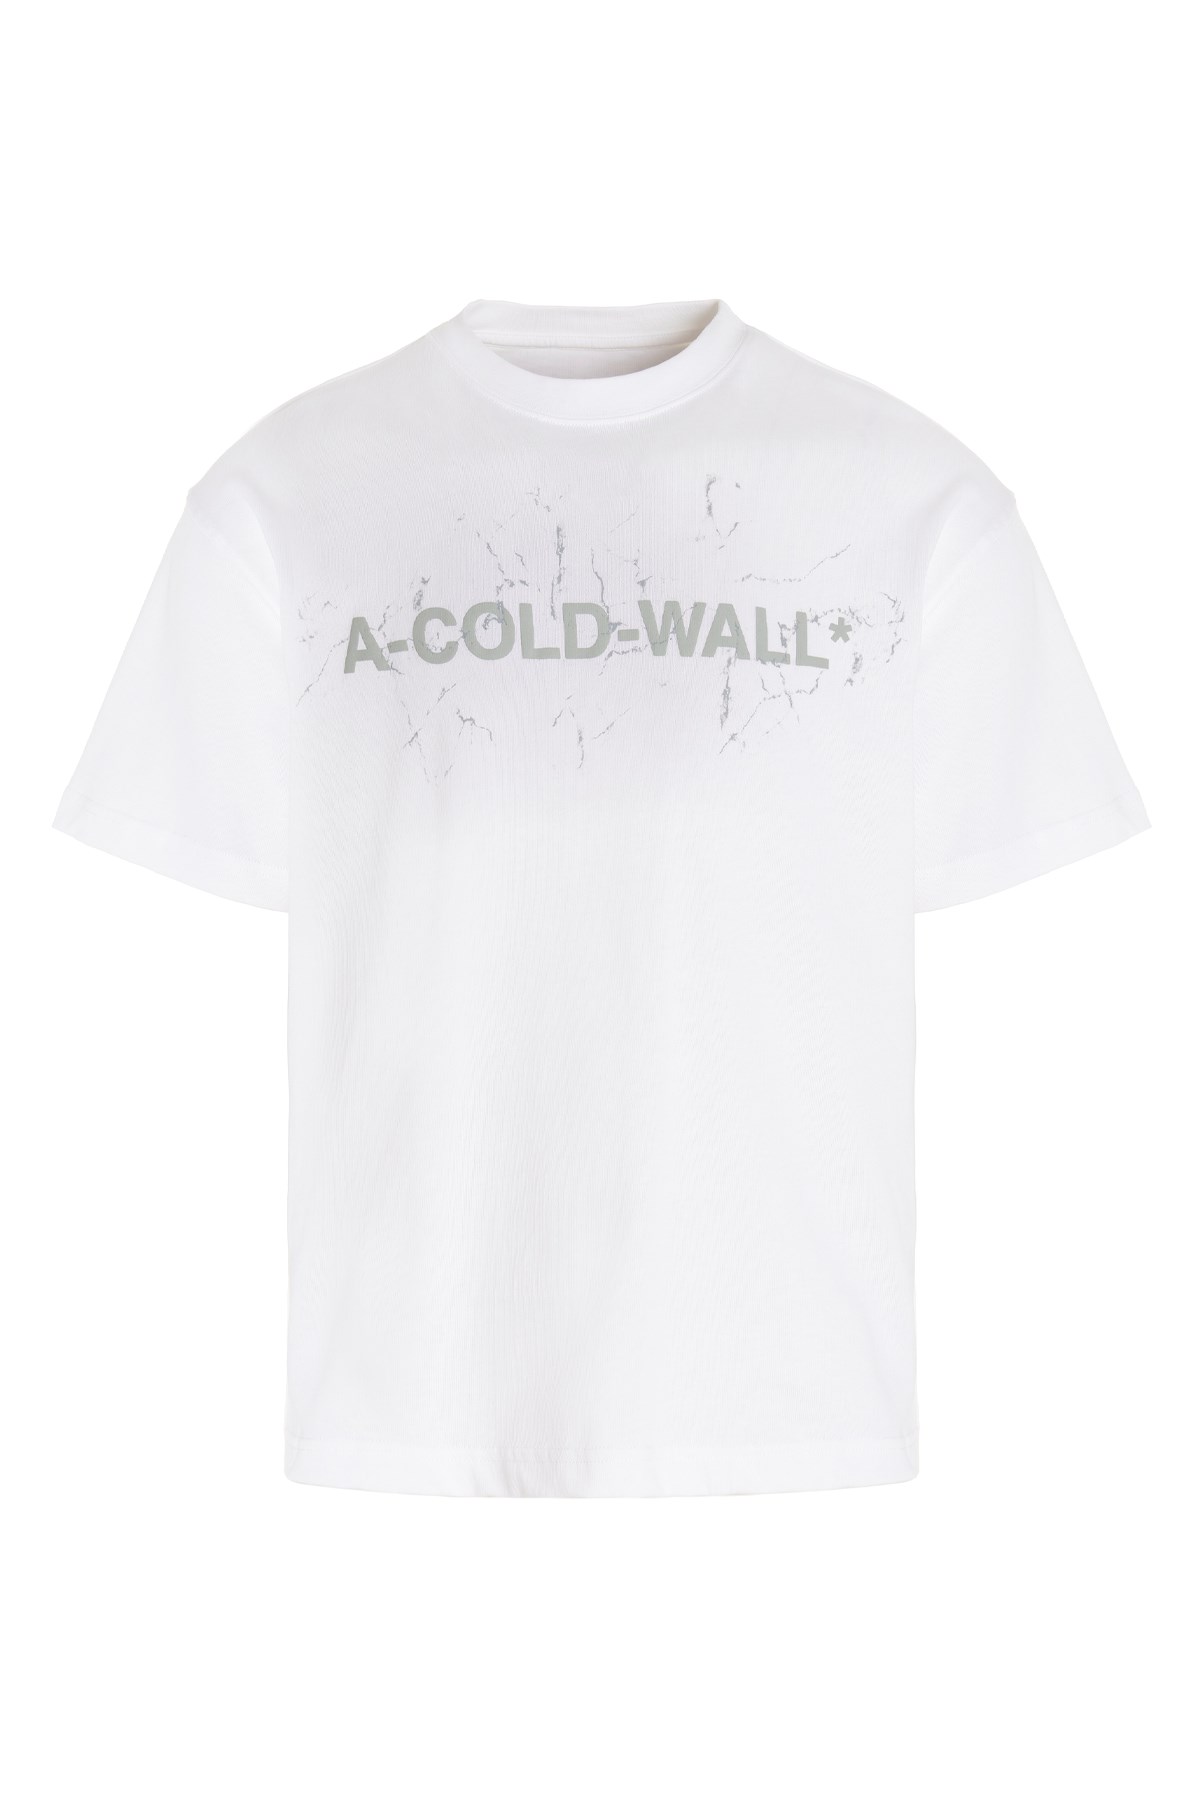 A-COLD-WALL* T-Shirt Mit Ss-Logo